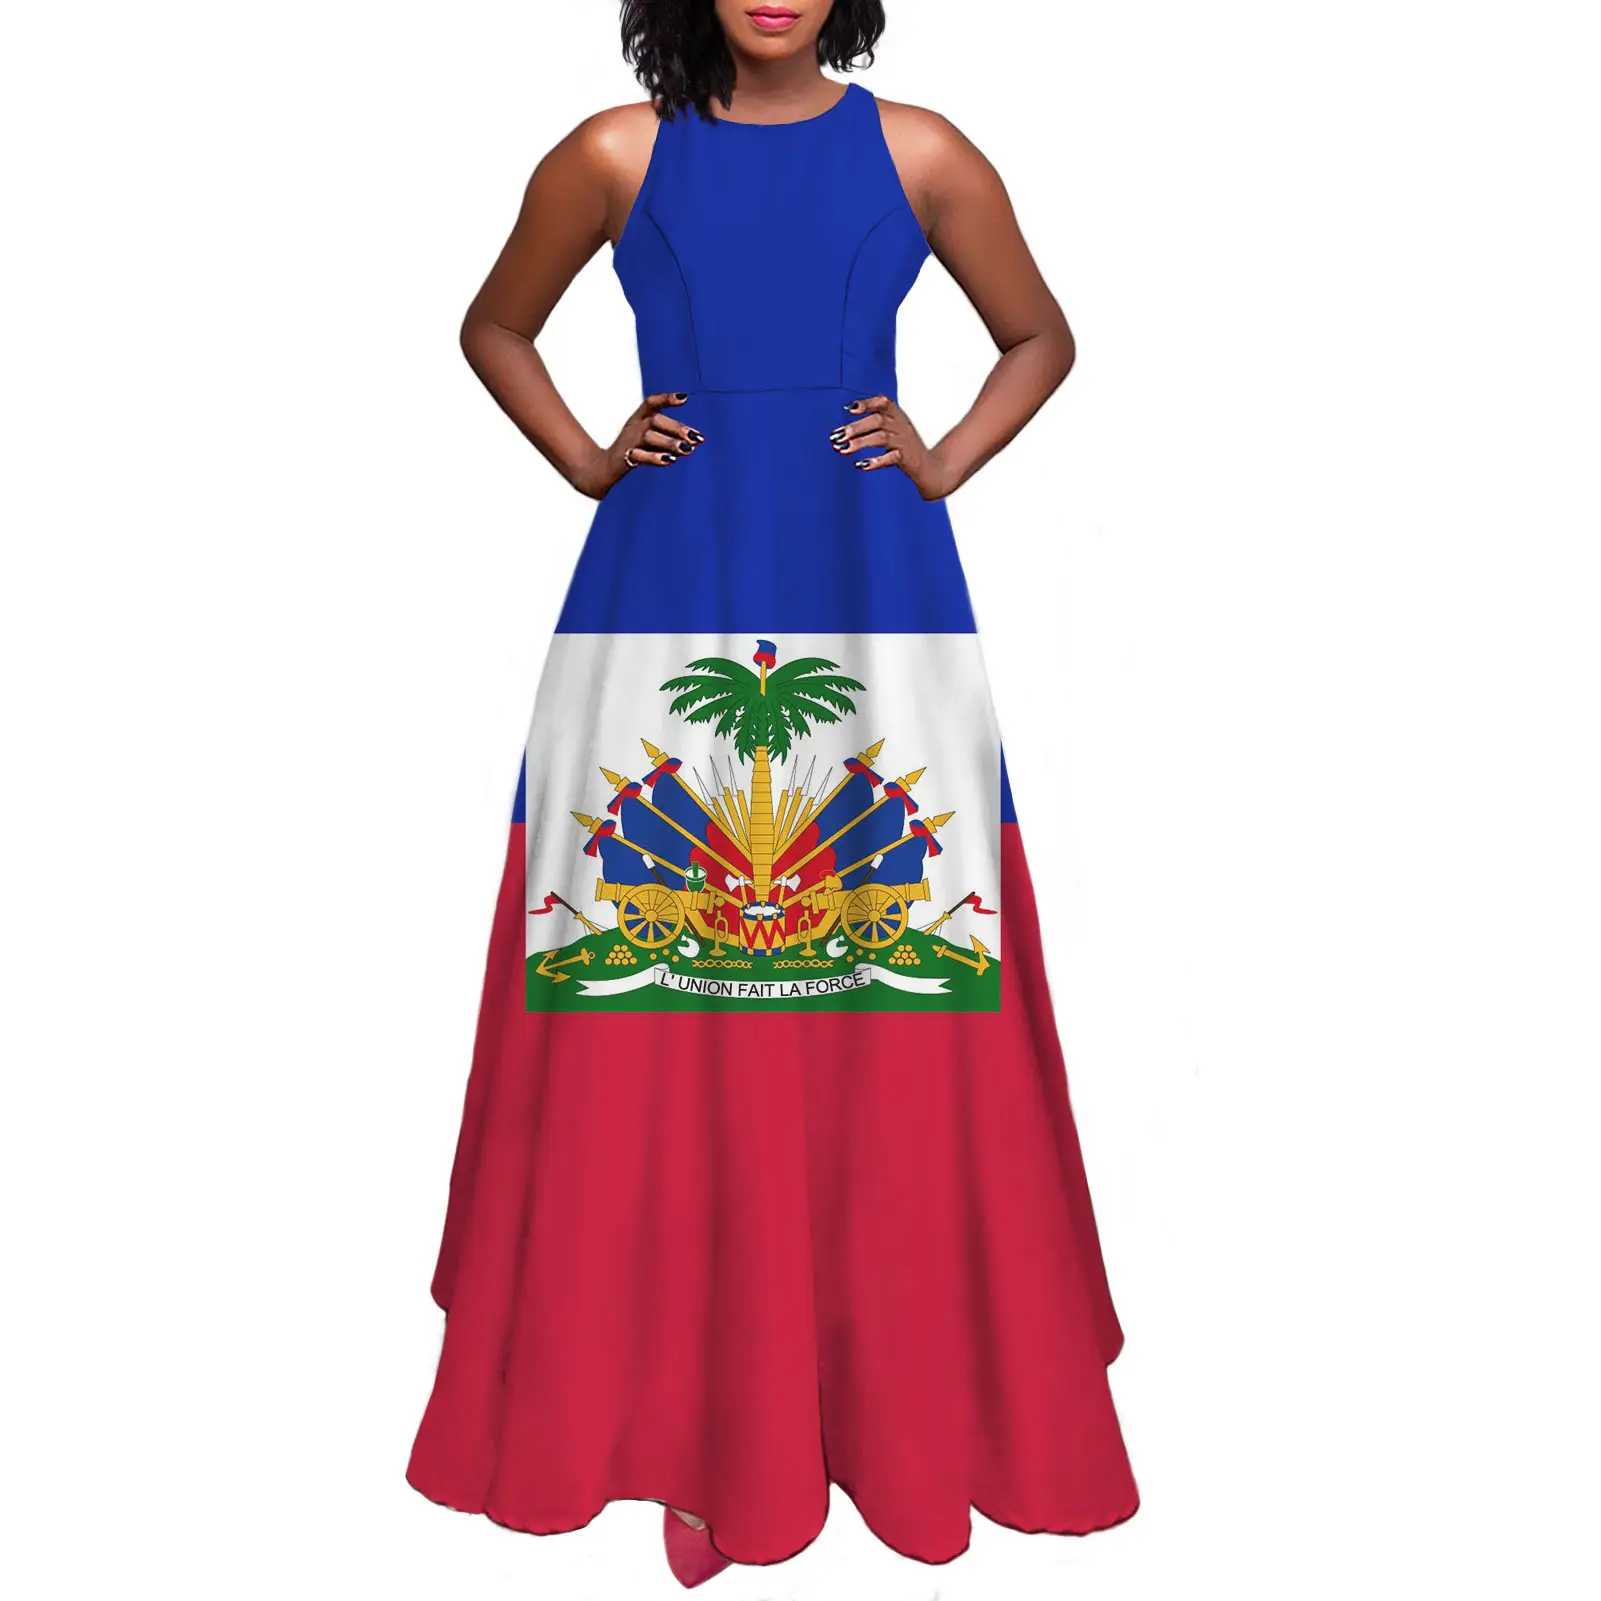 Haiti Flag Printed Haitian Long Maxi Dress Ladies Women Casual Summer Sleeveless Casual Sexy Vintage Empire Waist Dresses